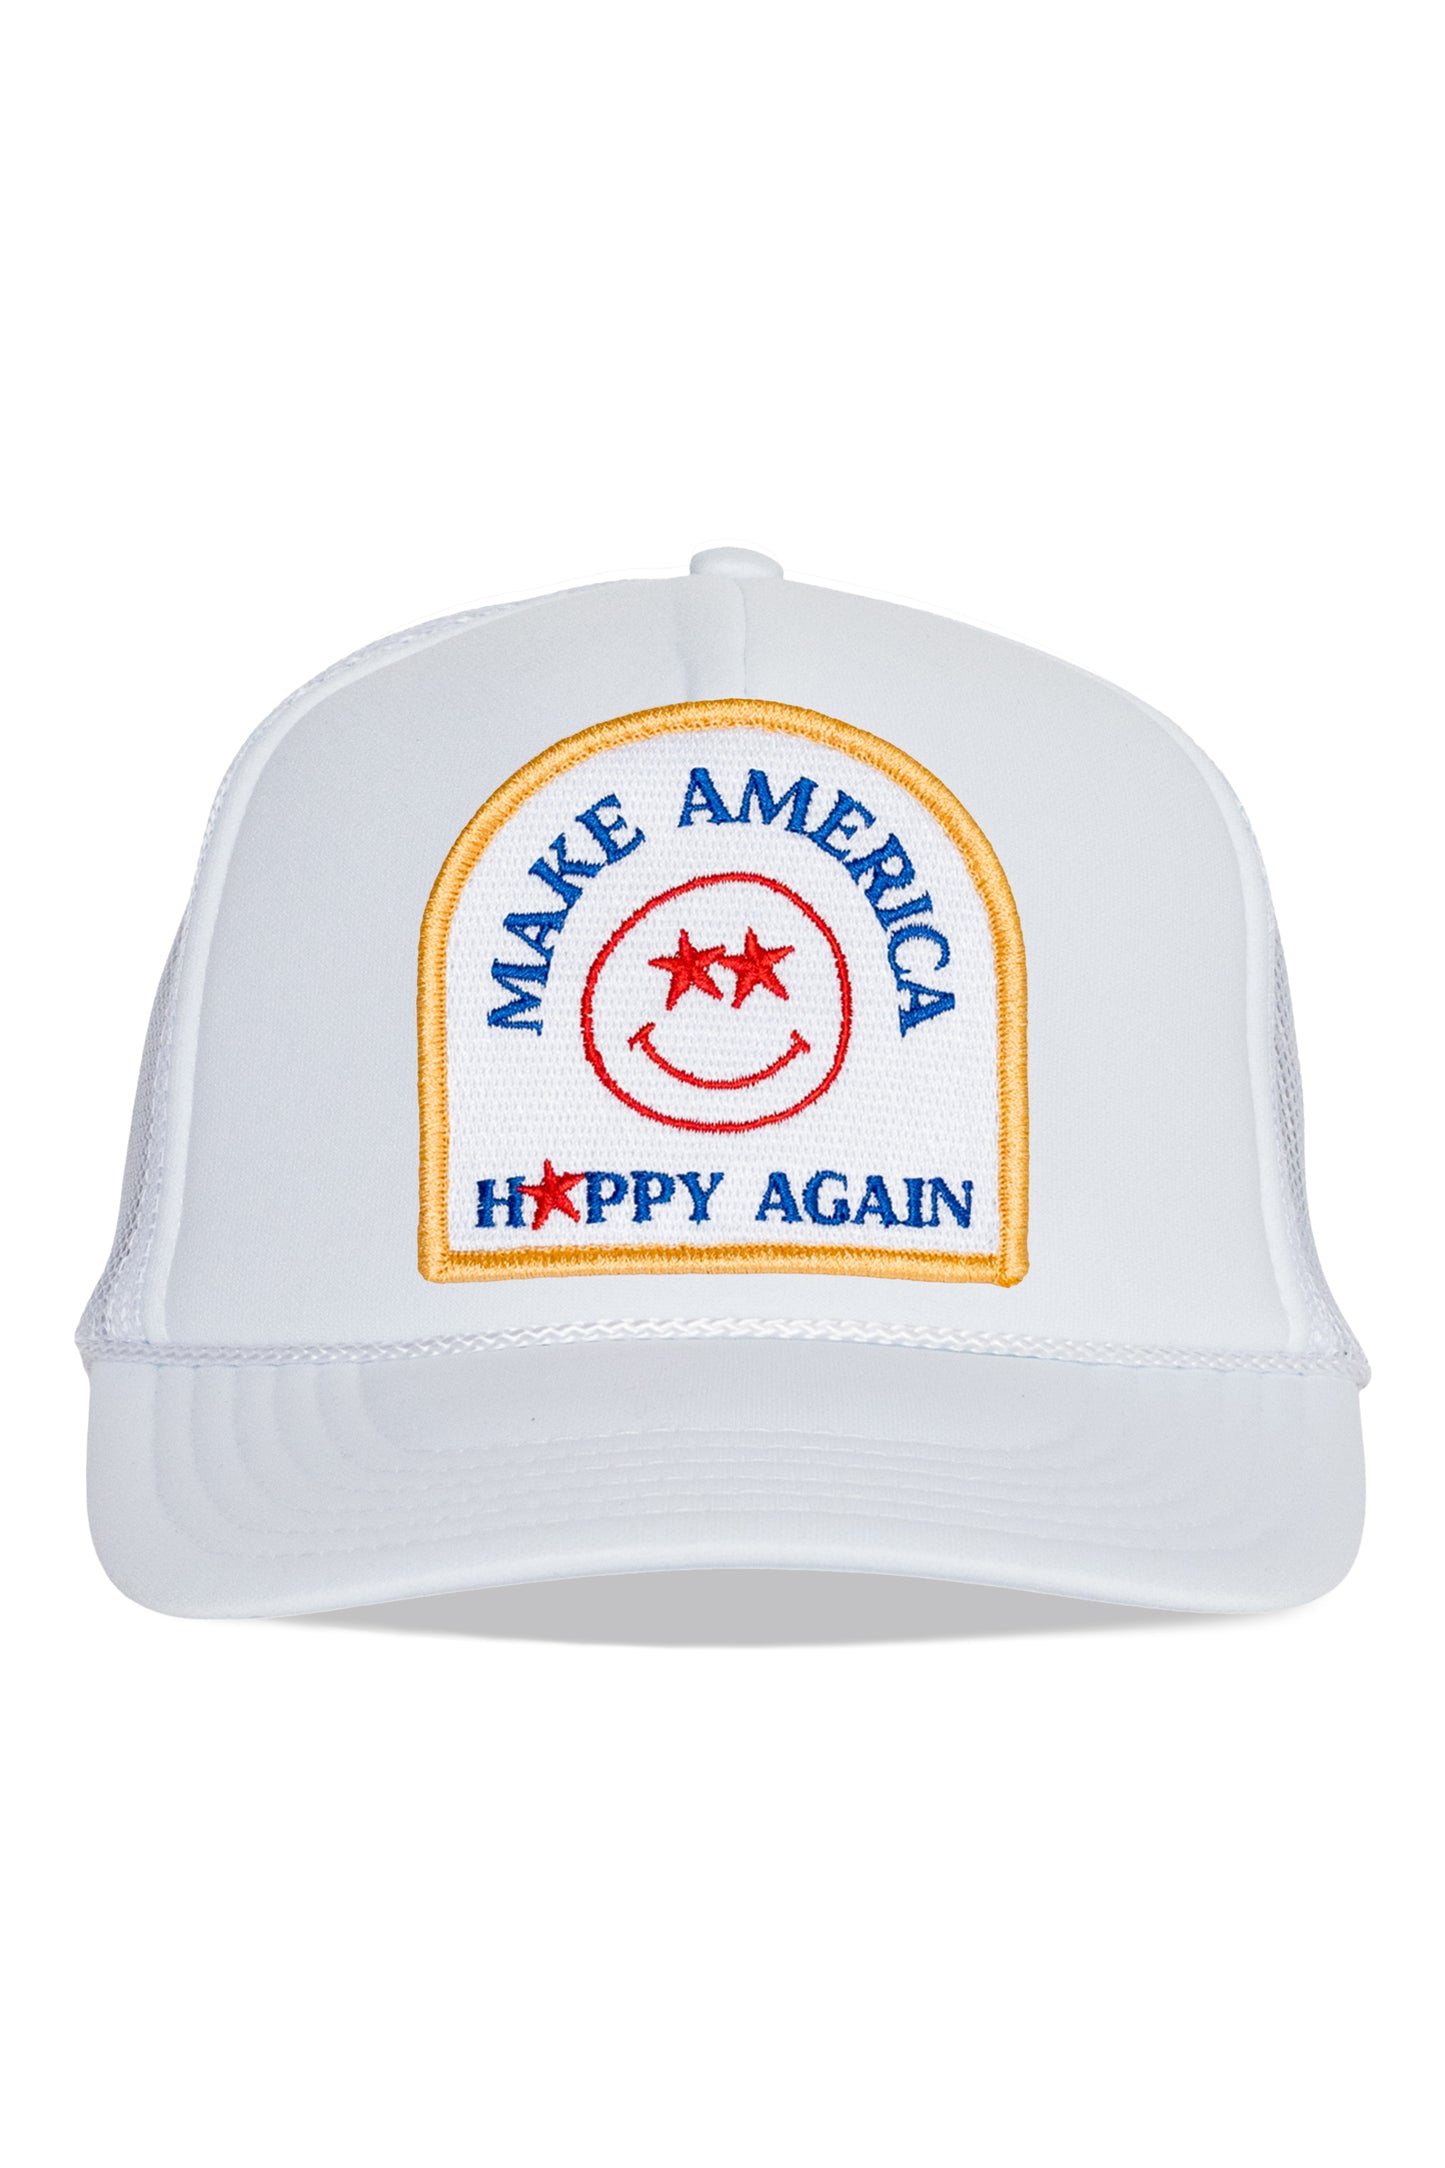 Make America Happy Again - White